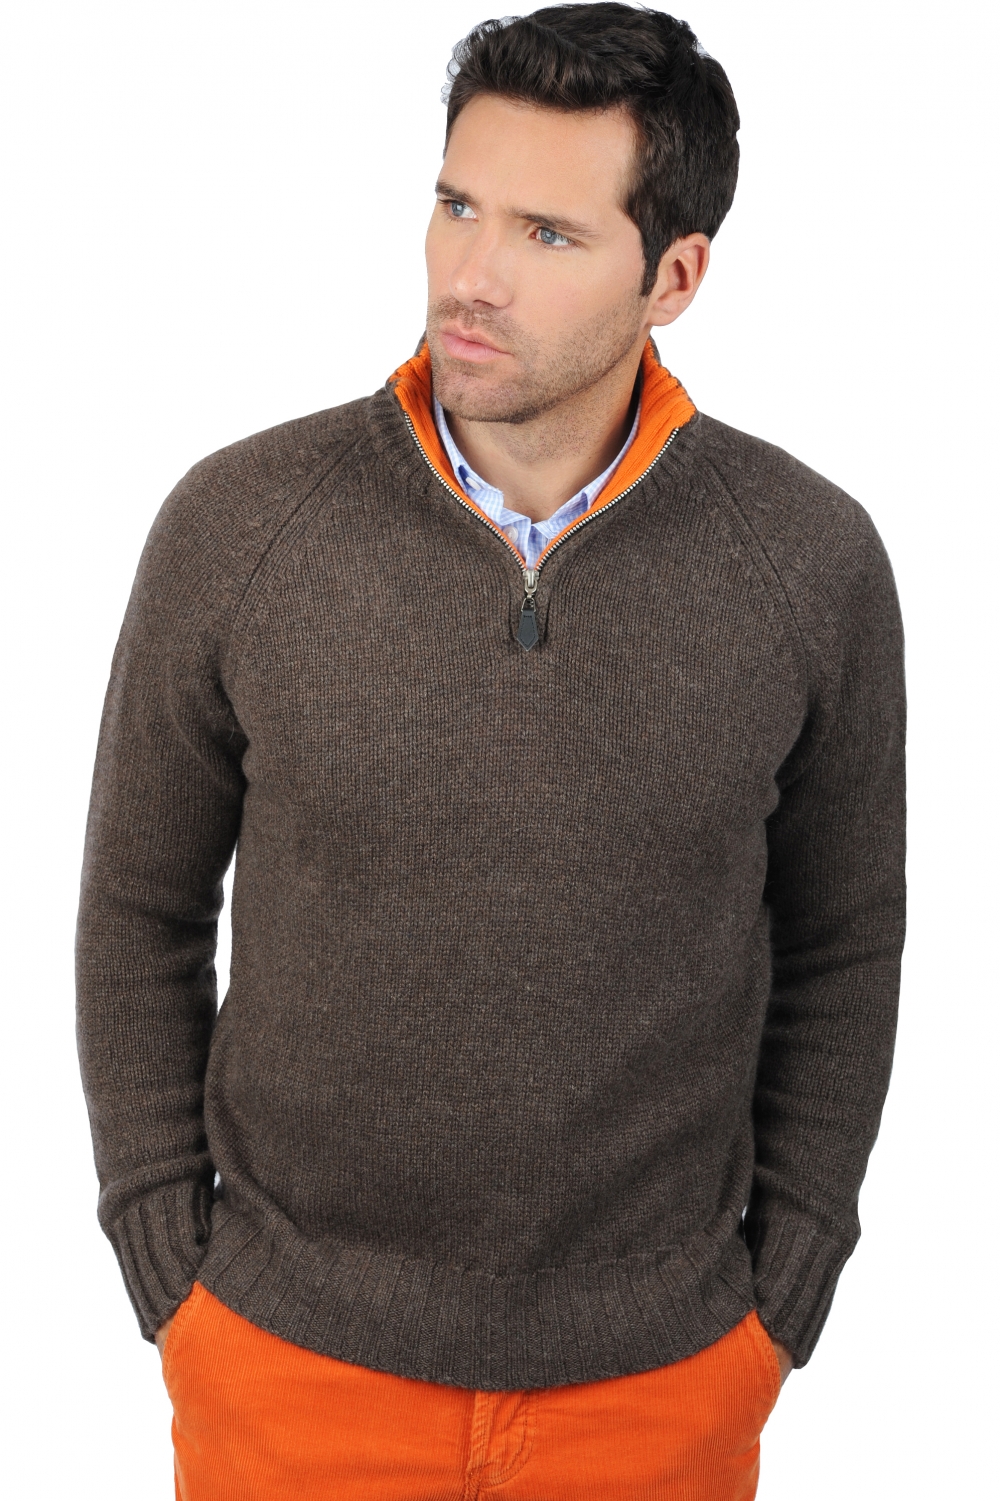 Cashmere men polo style sweaters olivier marron chine orange l